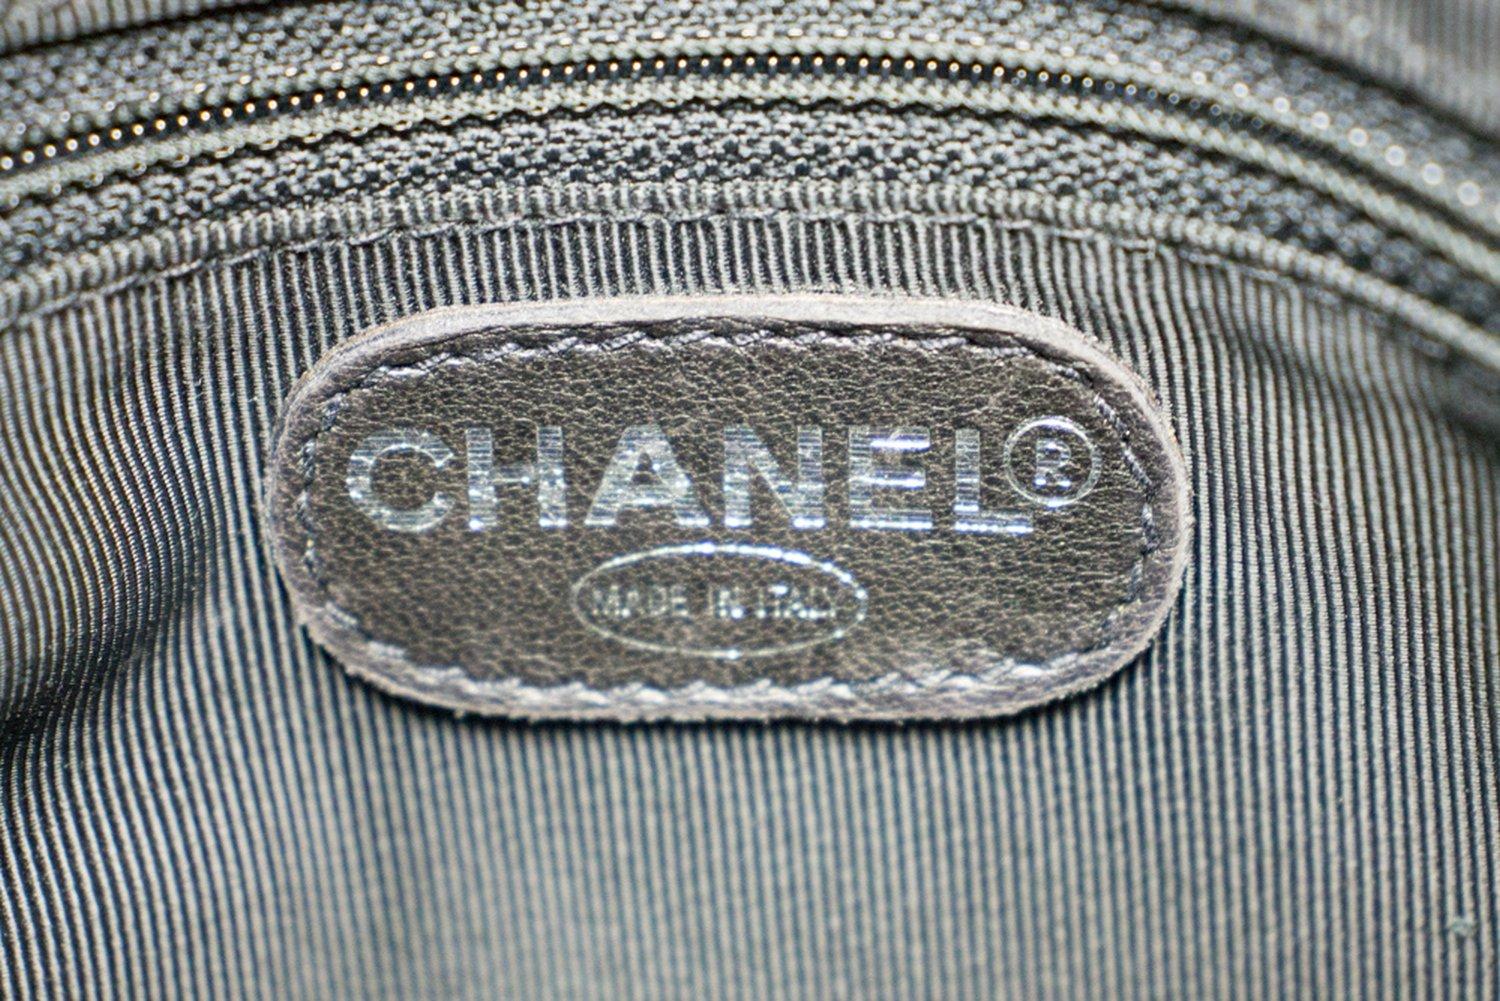 CHANEL Caviar Logo Chain Shoulder Bag Leather Black Silver Hardwar 11